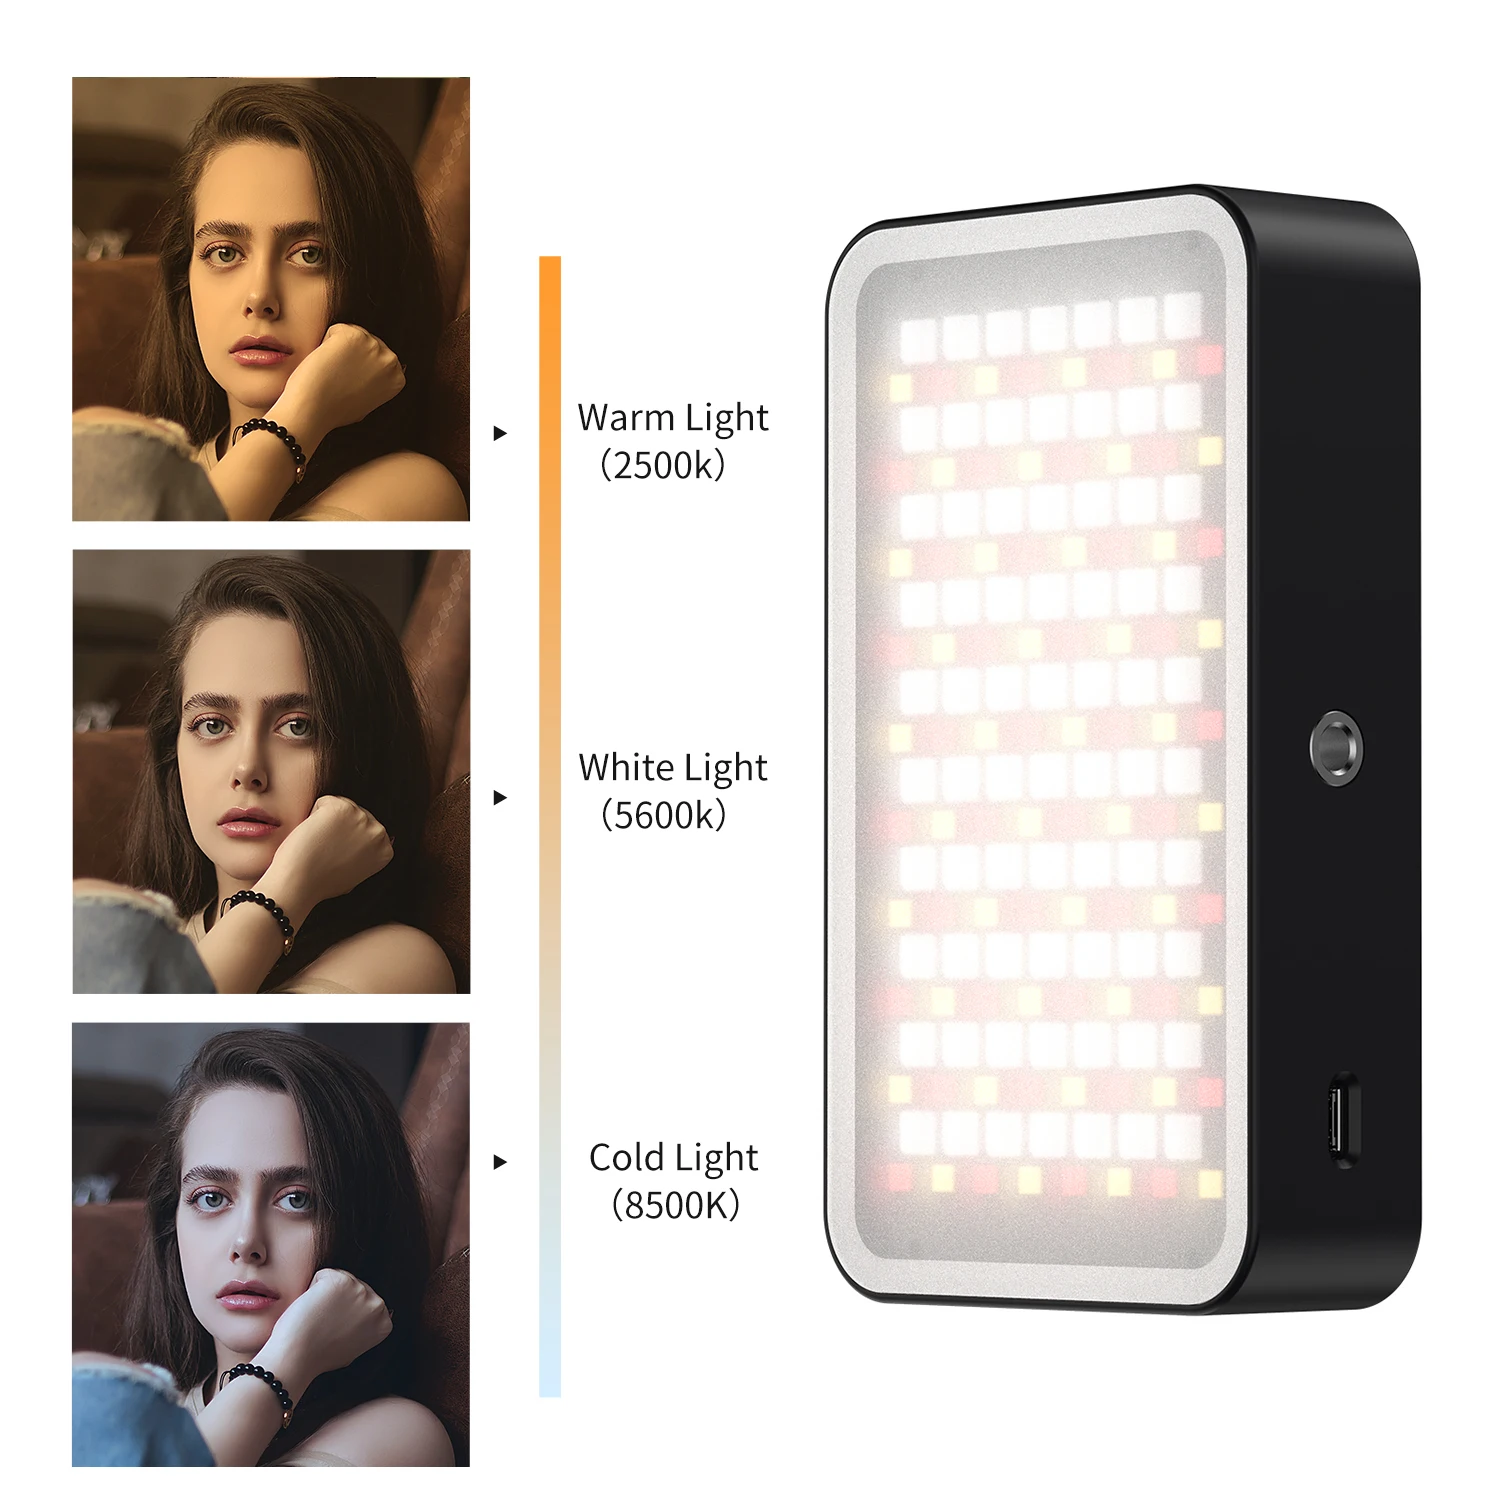 TELESIN 3200mAh RGB Video Light 2500k 8500k With Display Screen LED Vlog Photography Fill Light DSLR Smartphone Selfie Lighting enlarge